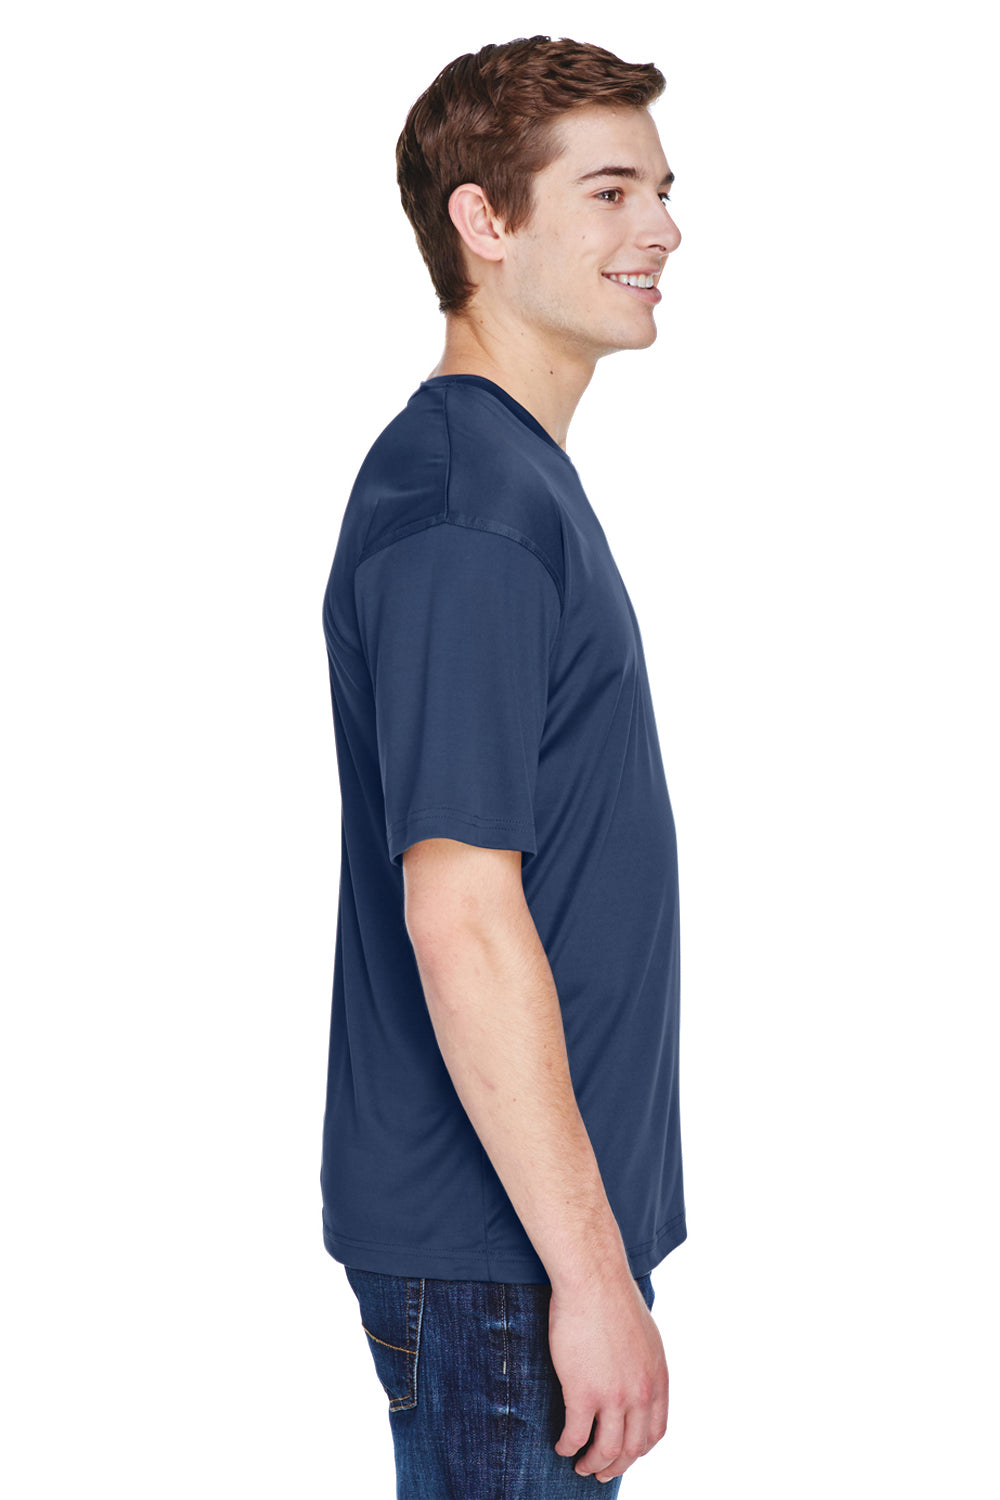 UltraClub 8620 Mens Cool & Dry Performance Moisture Wicking Short Sleeve Crewneck T-Shirt Navy Blue Side